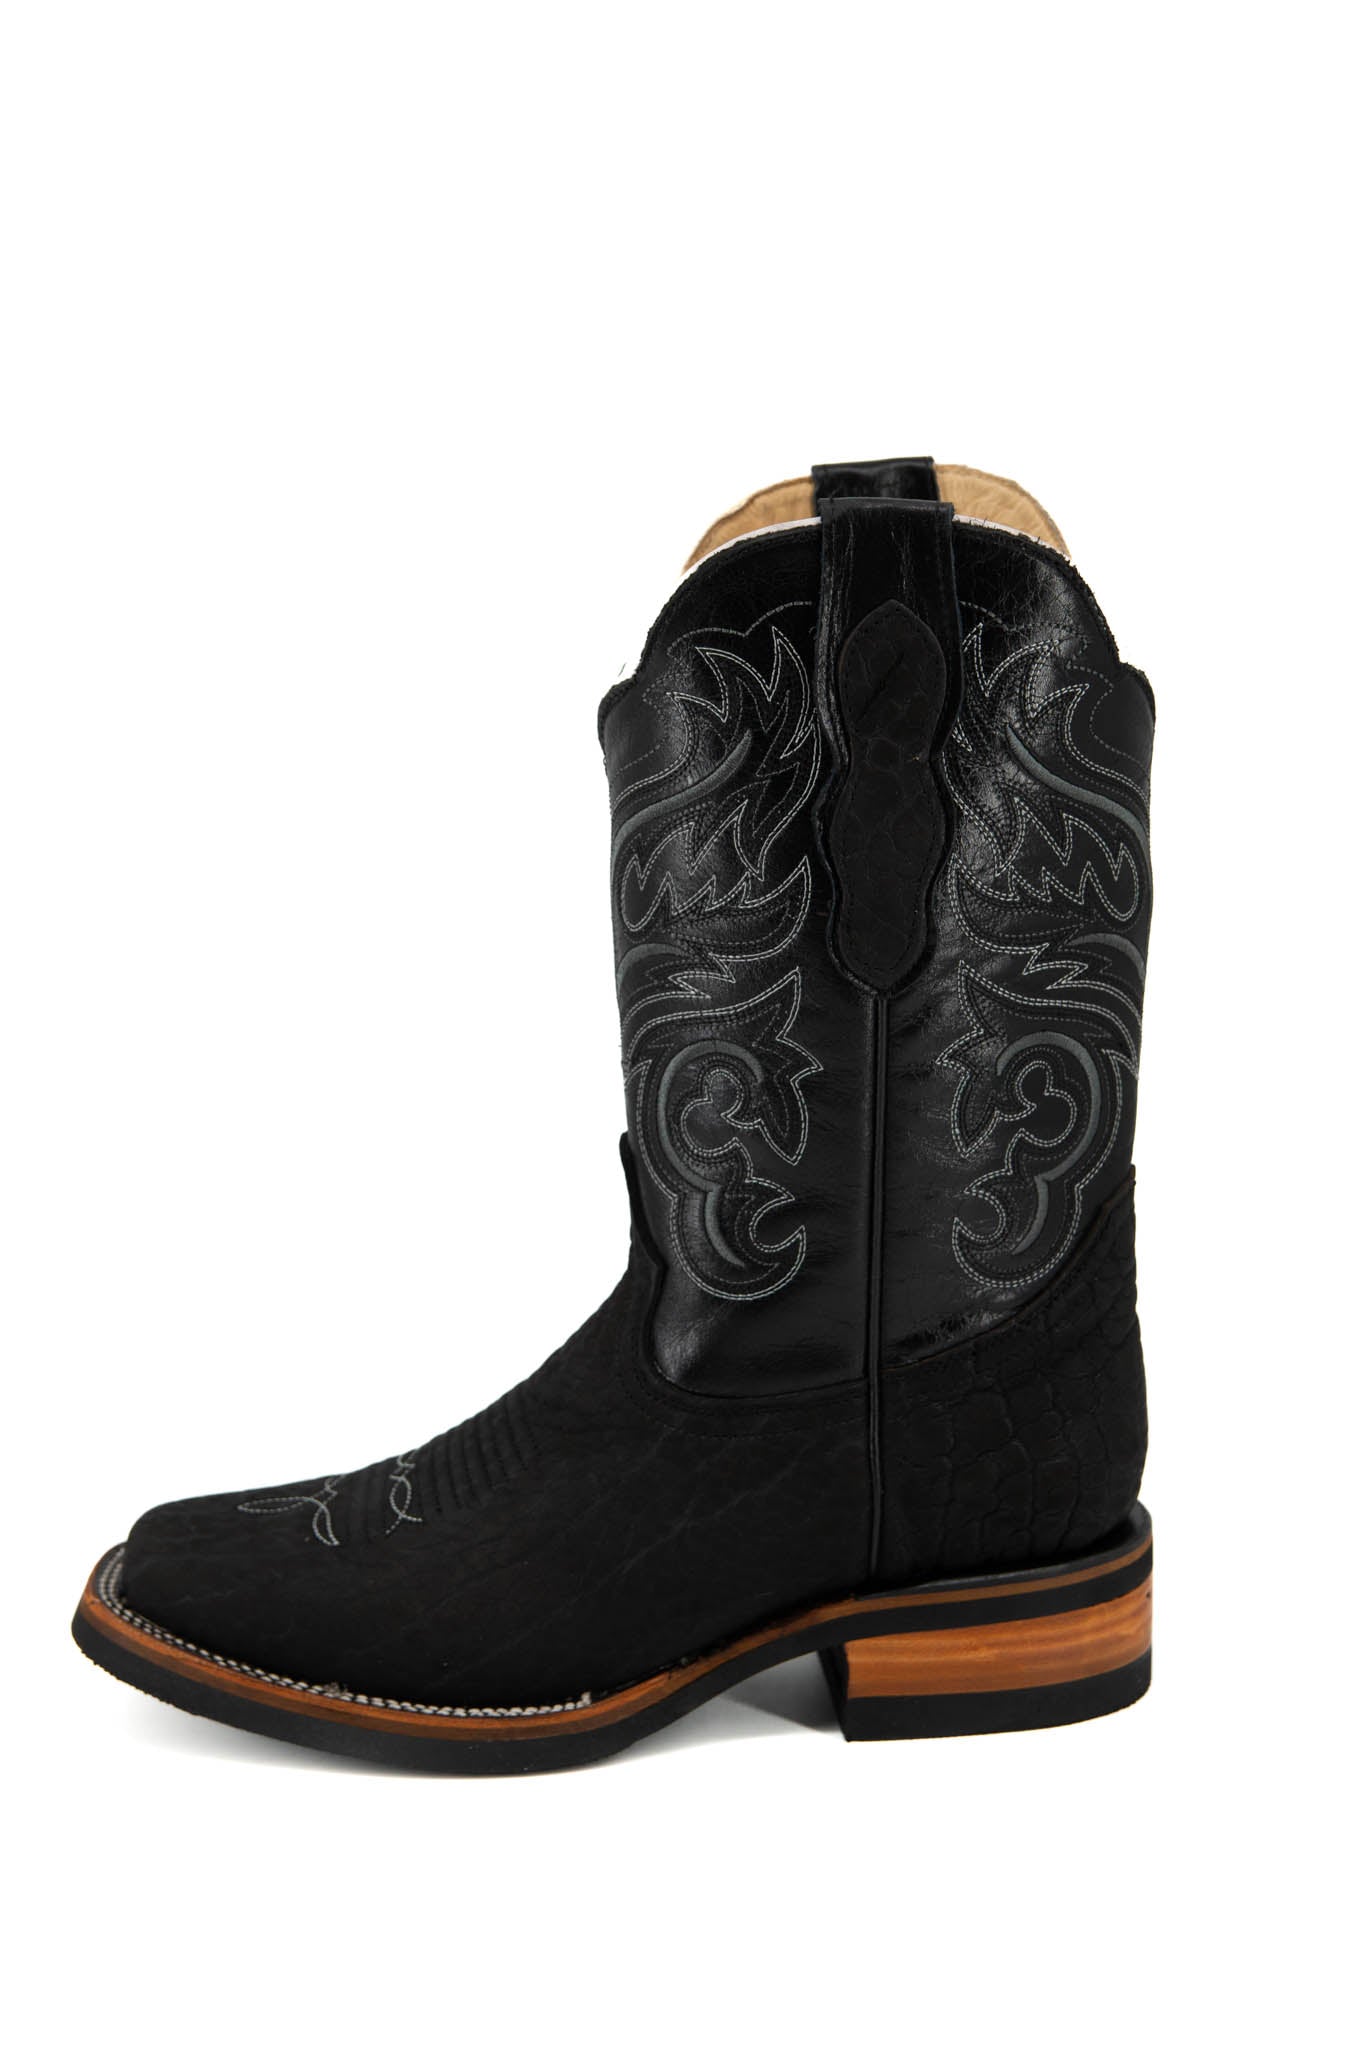 Est. 250 Cuello De Toro Rodeo Men's Boot